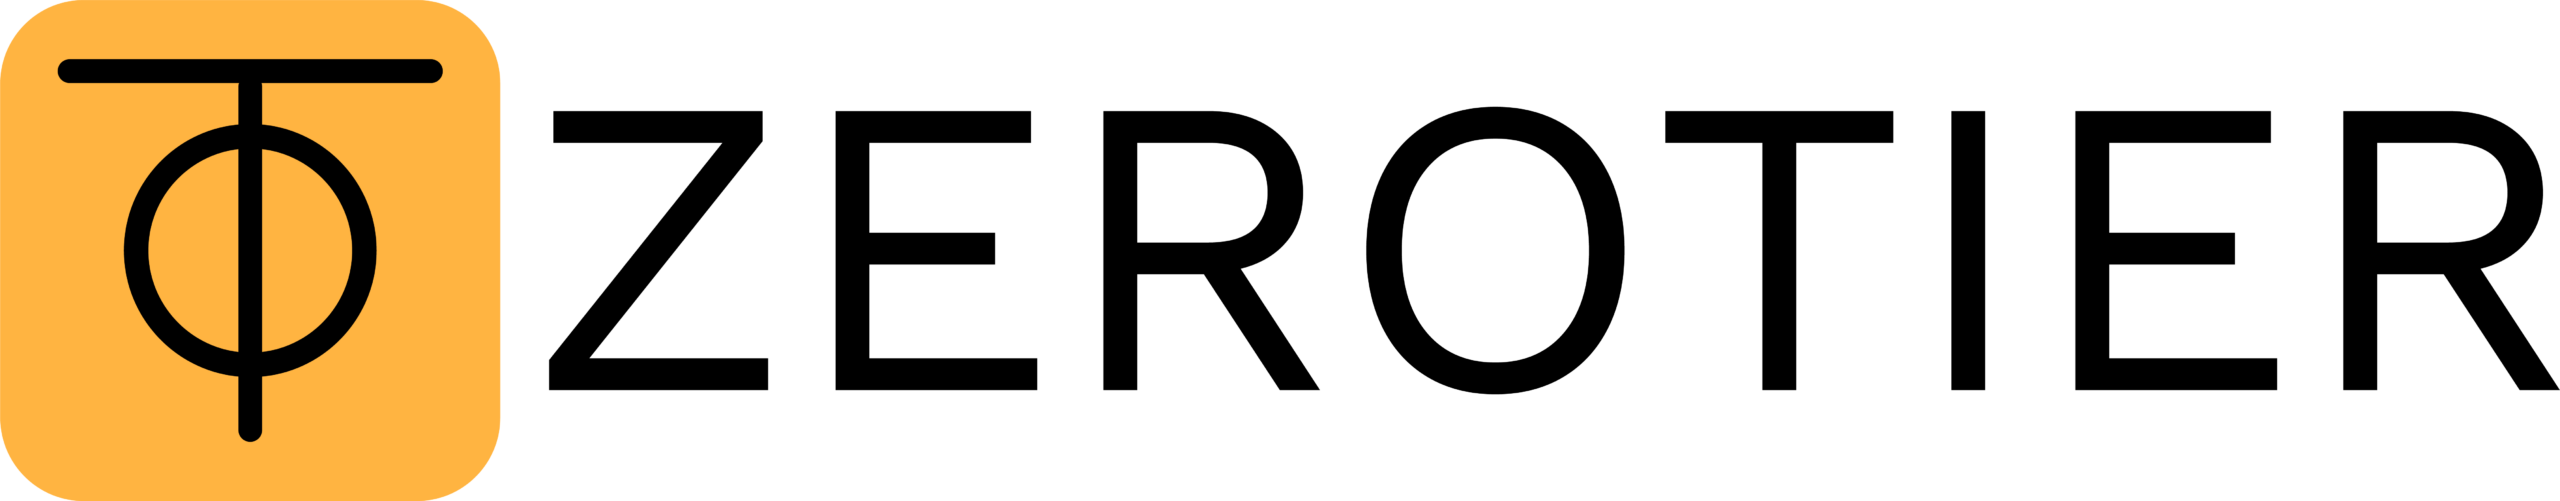 Logotipo de nivel cero